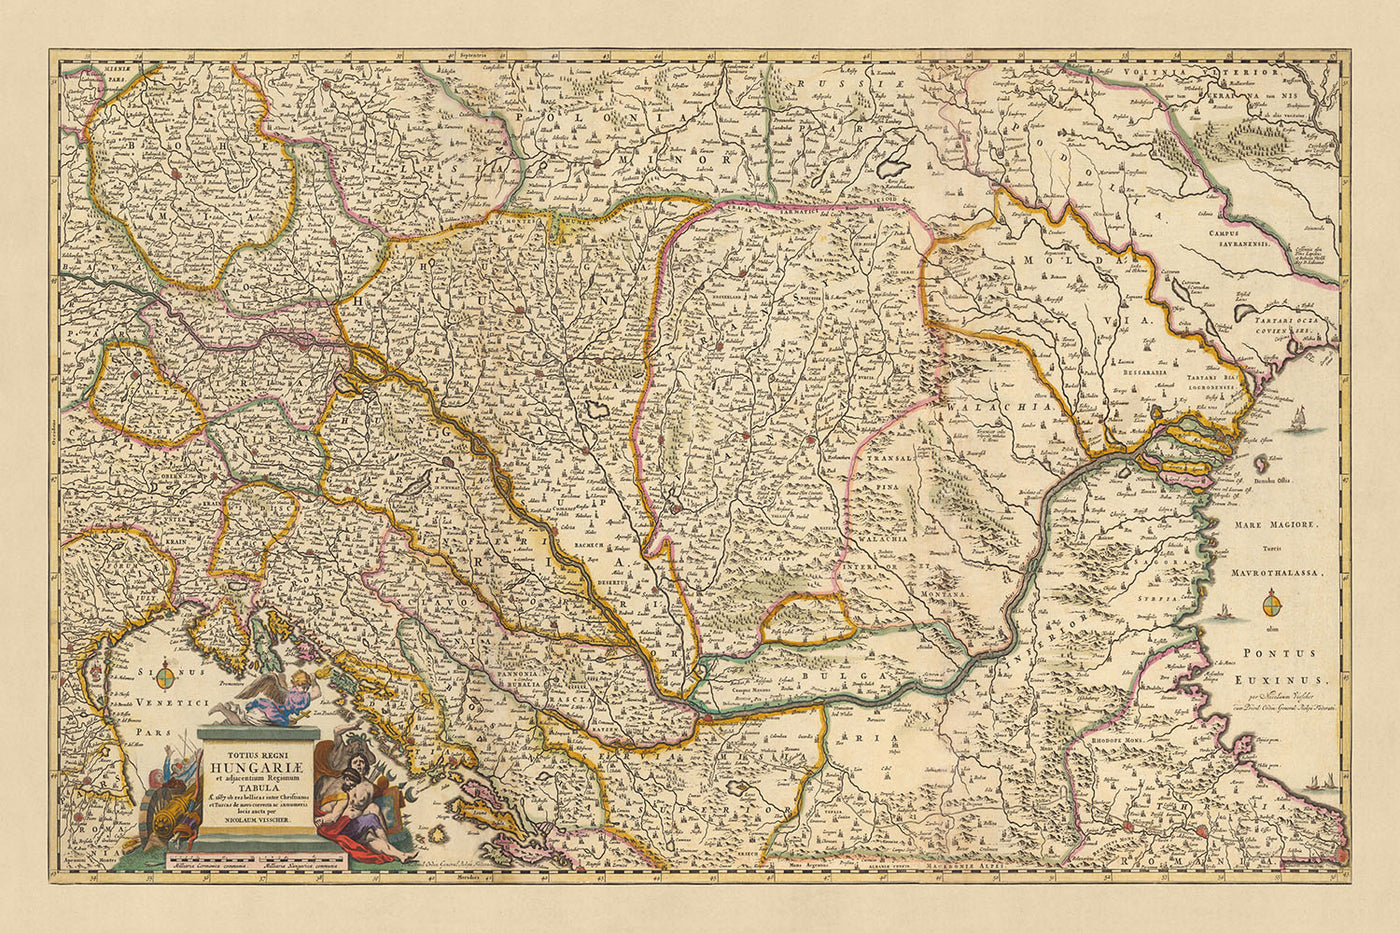 Old Map of Kingdom of Hungary by Visscher, 1690: Budapest, Vienna, Zagreb, Bucharest, Bratislava